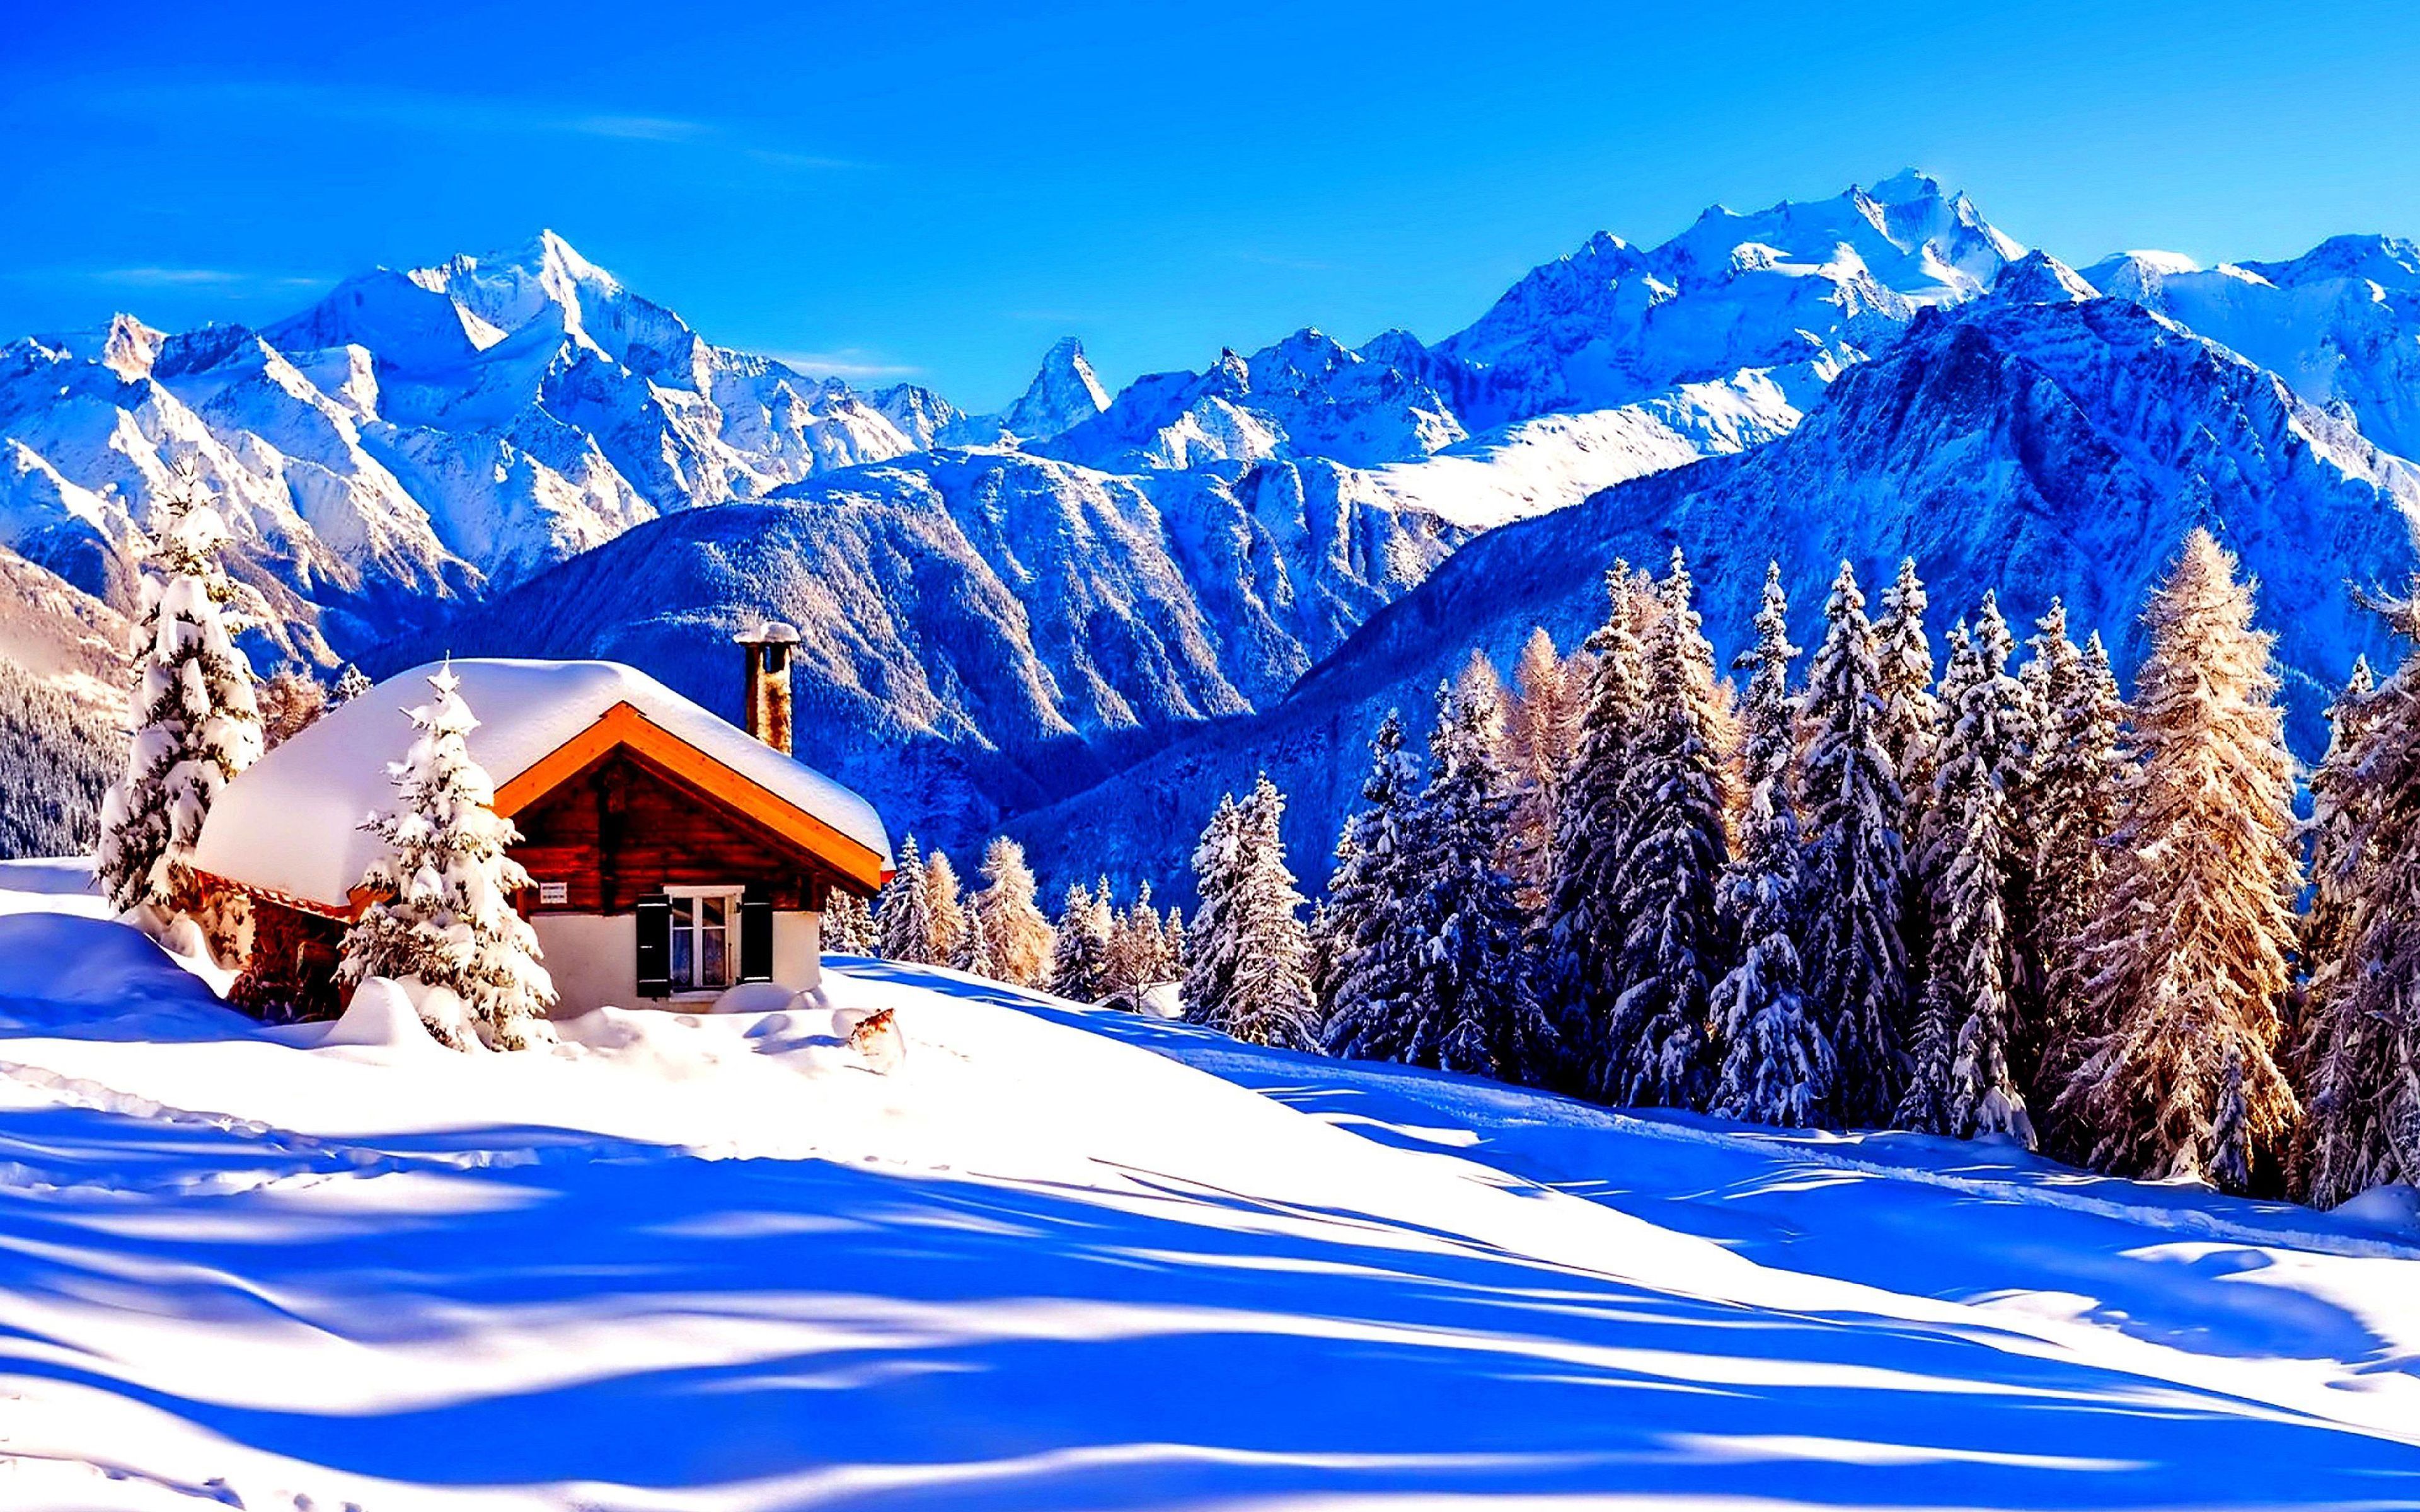  Alpen Hintergrundbild 3840x2400. 4k, alpen, winter, berge, hütte, schneewehe, europa. Горный пейзаж, Зимний домик для отдыха, Пейзажи